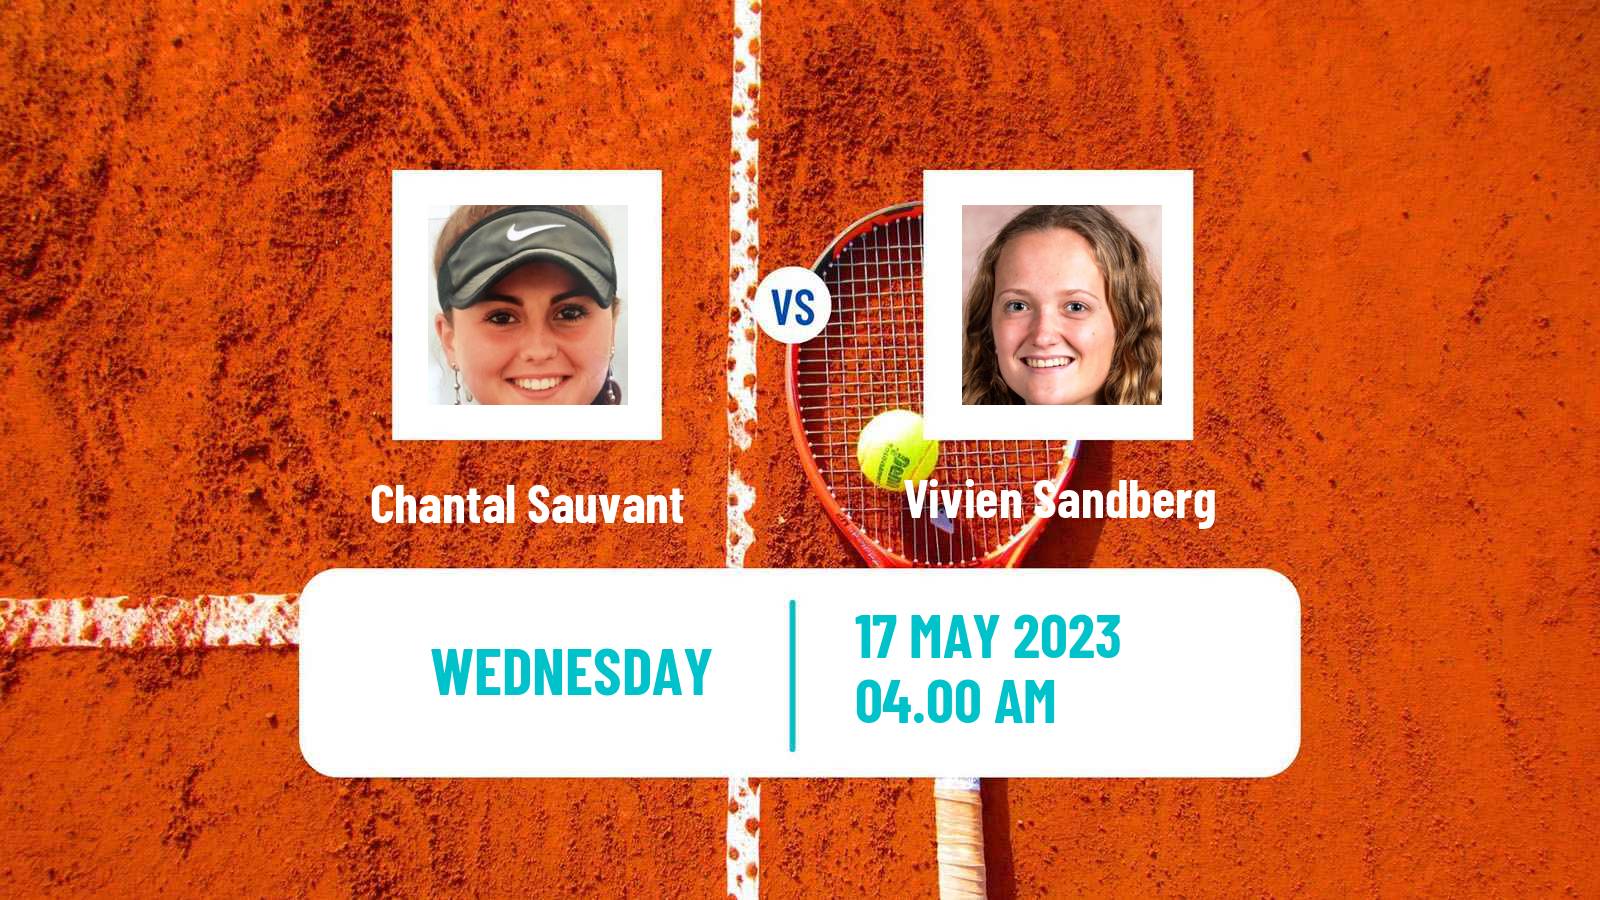 Tennis ITF W15 Antalya 16 Women Chantal Sauvant - Vivien Sandberg